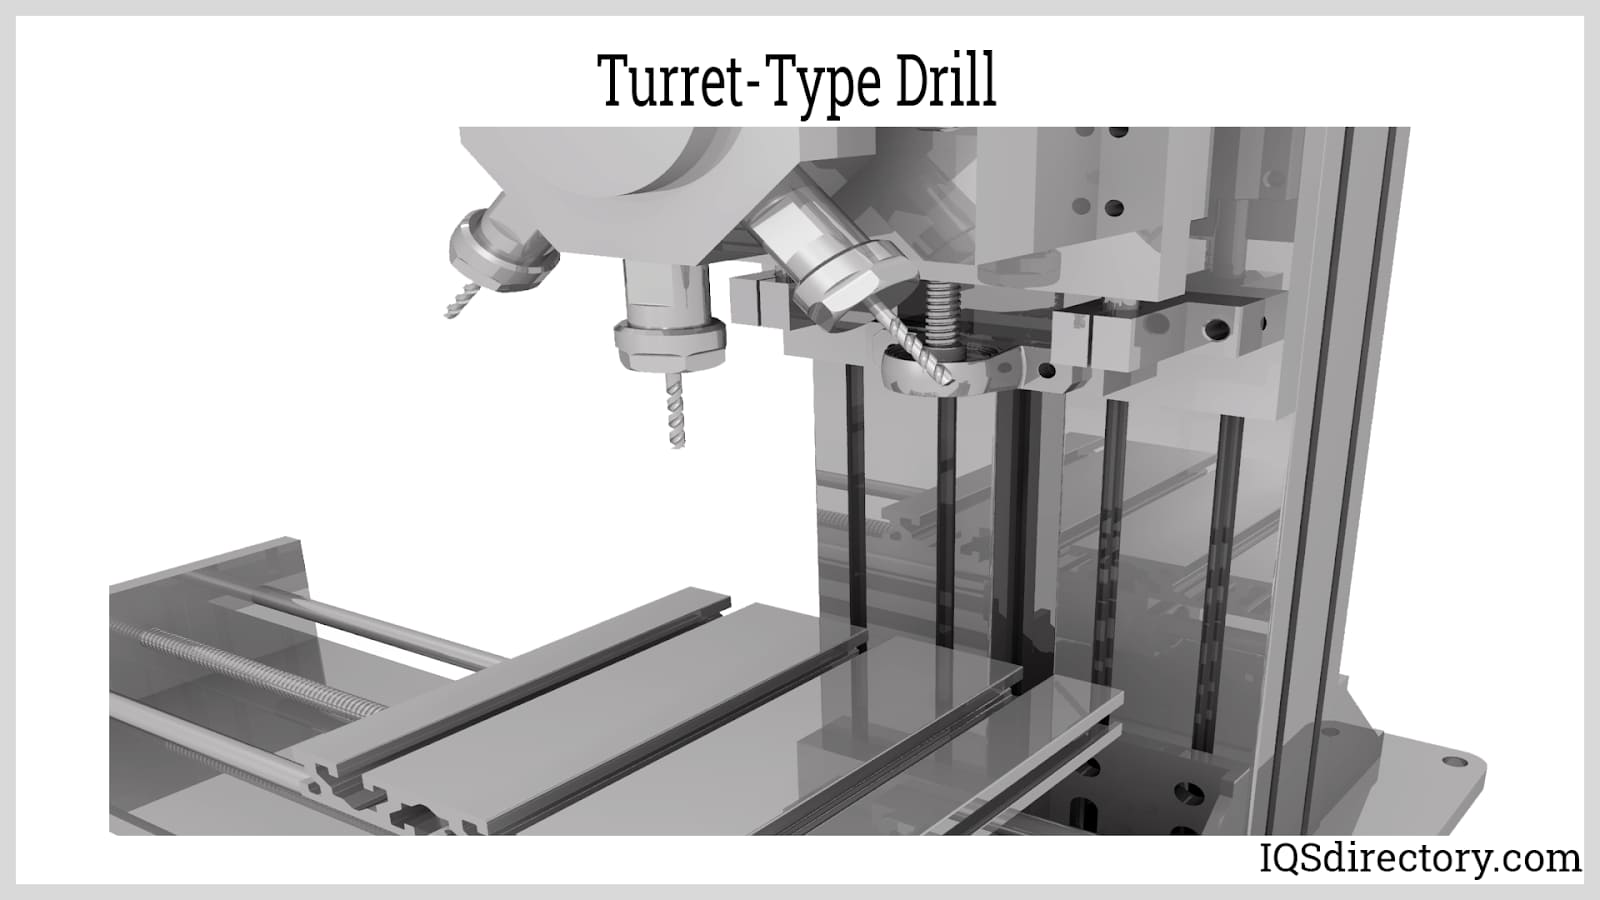 Turret-Type Drill